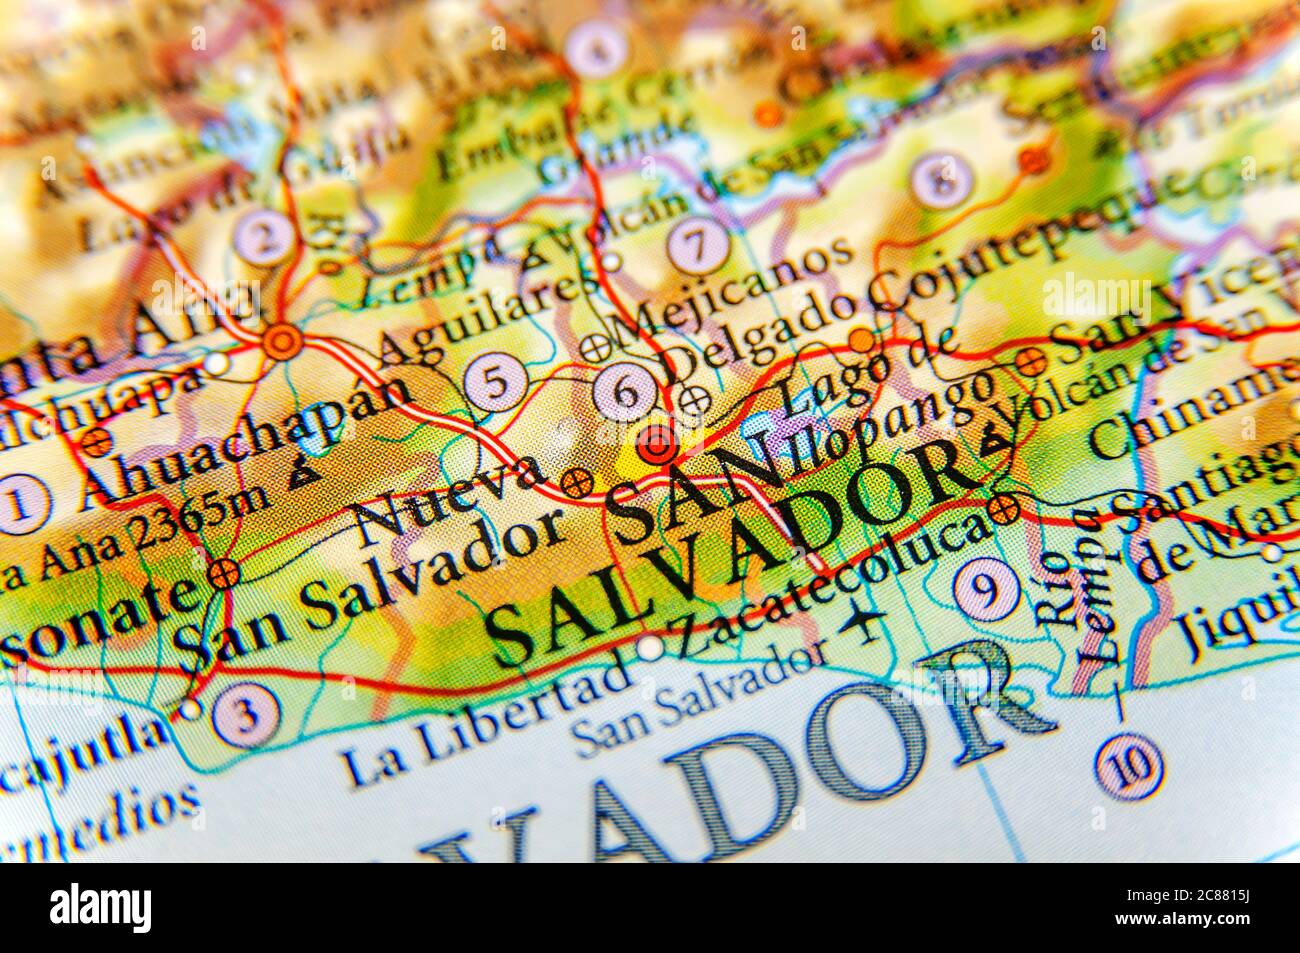 Geographic map of El Salvador city Stock Photo